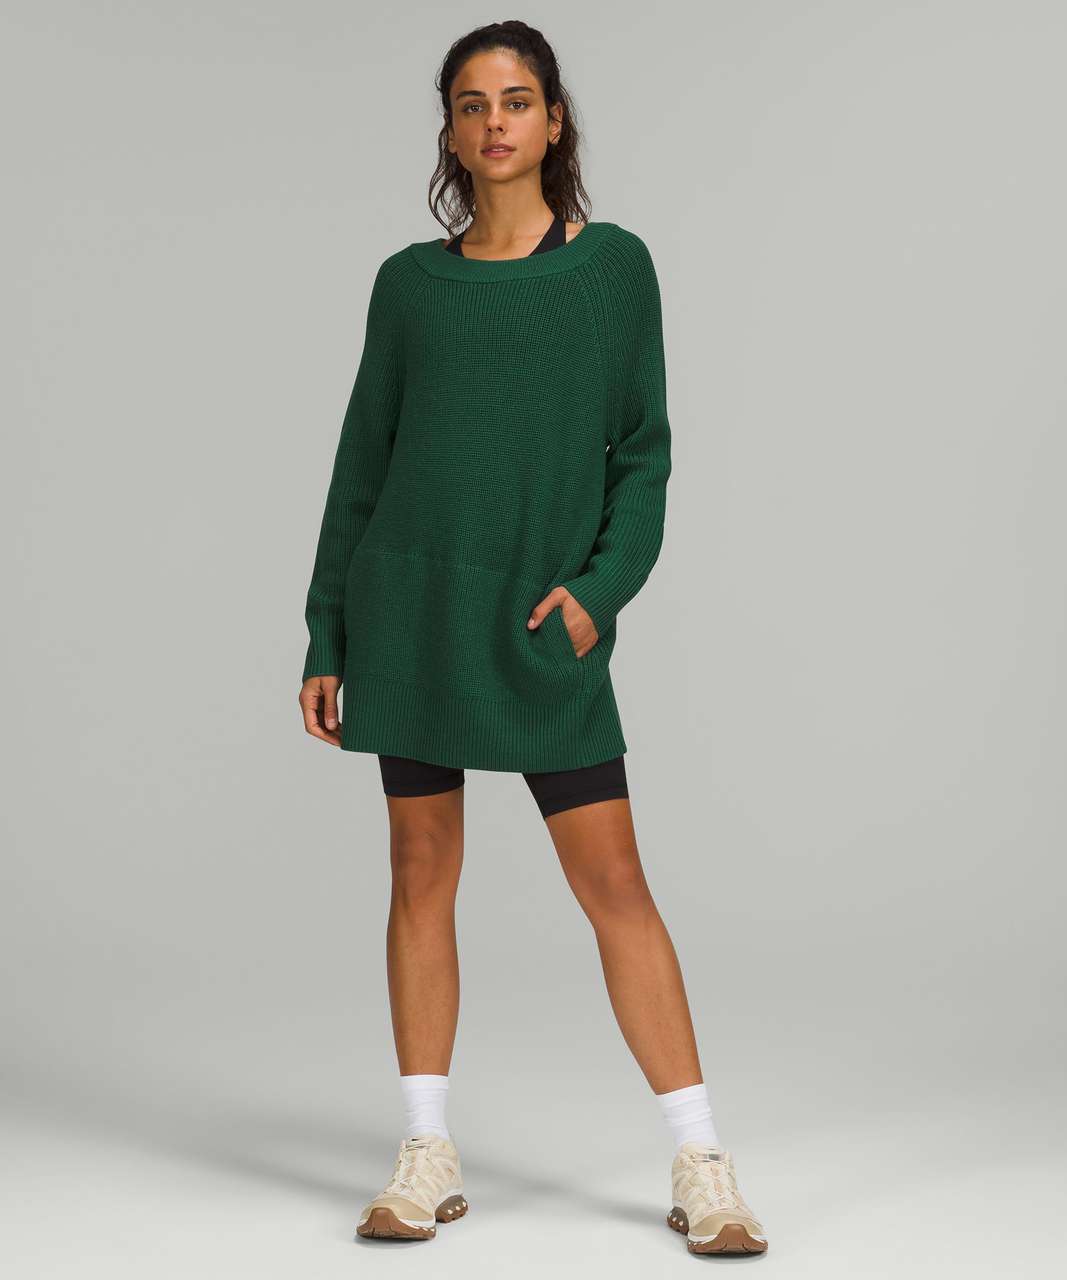 Lululemon Merino Wool Pullover Sweater - Heathered Everglade Green